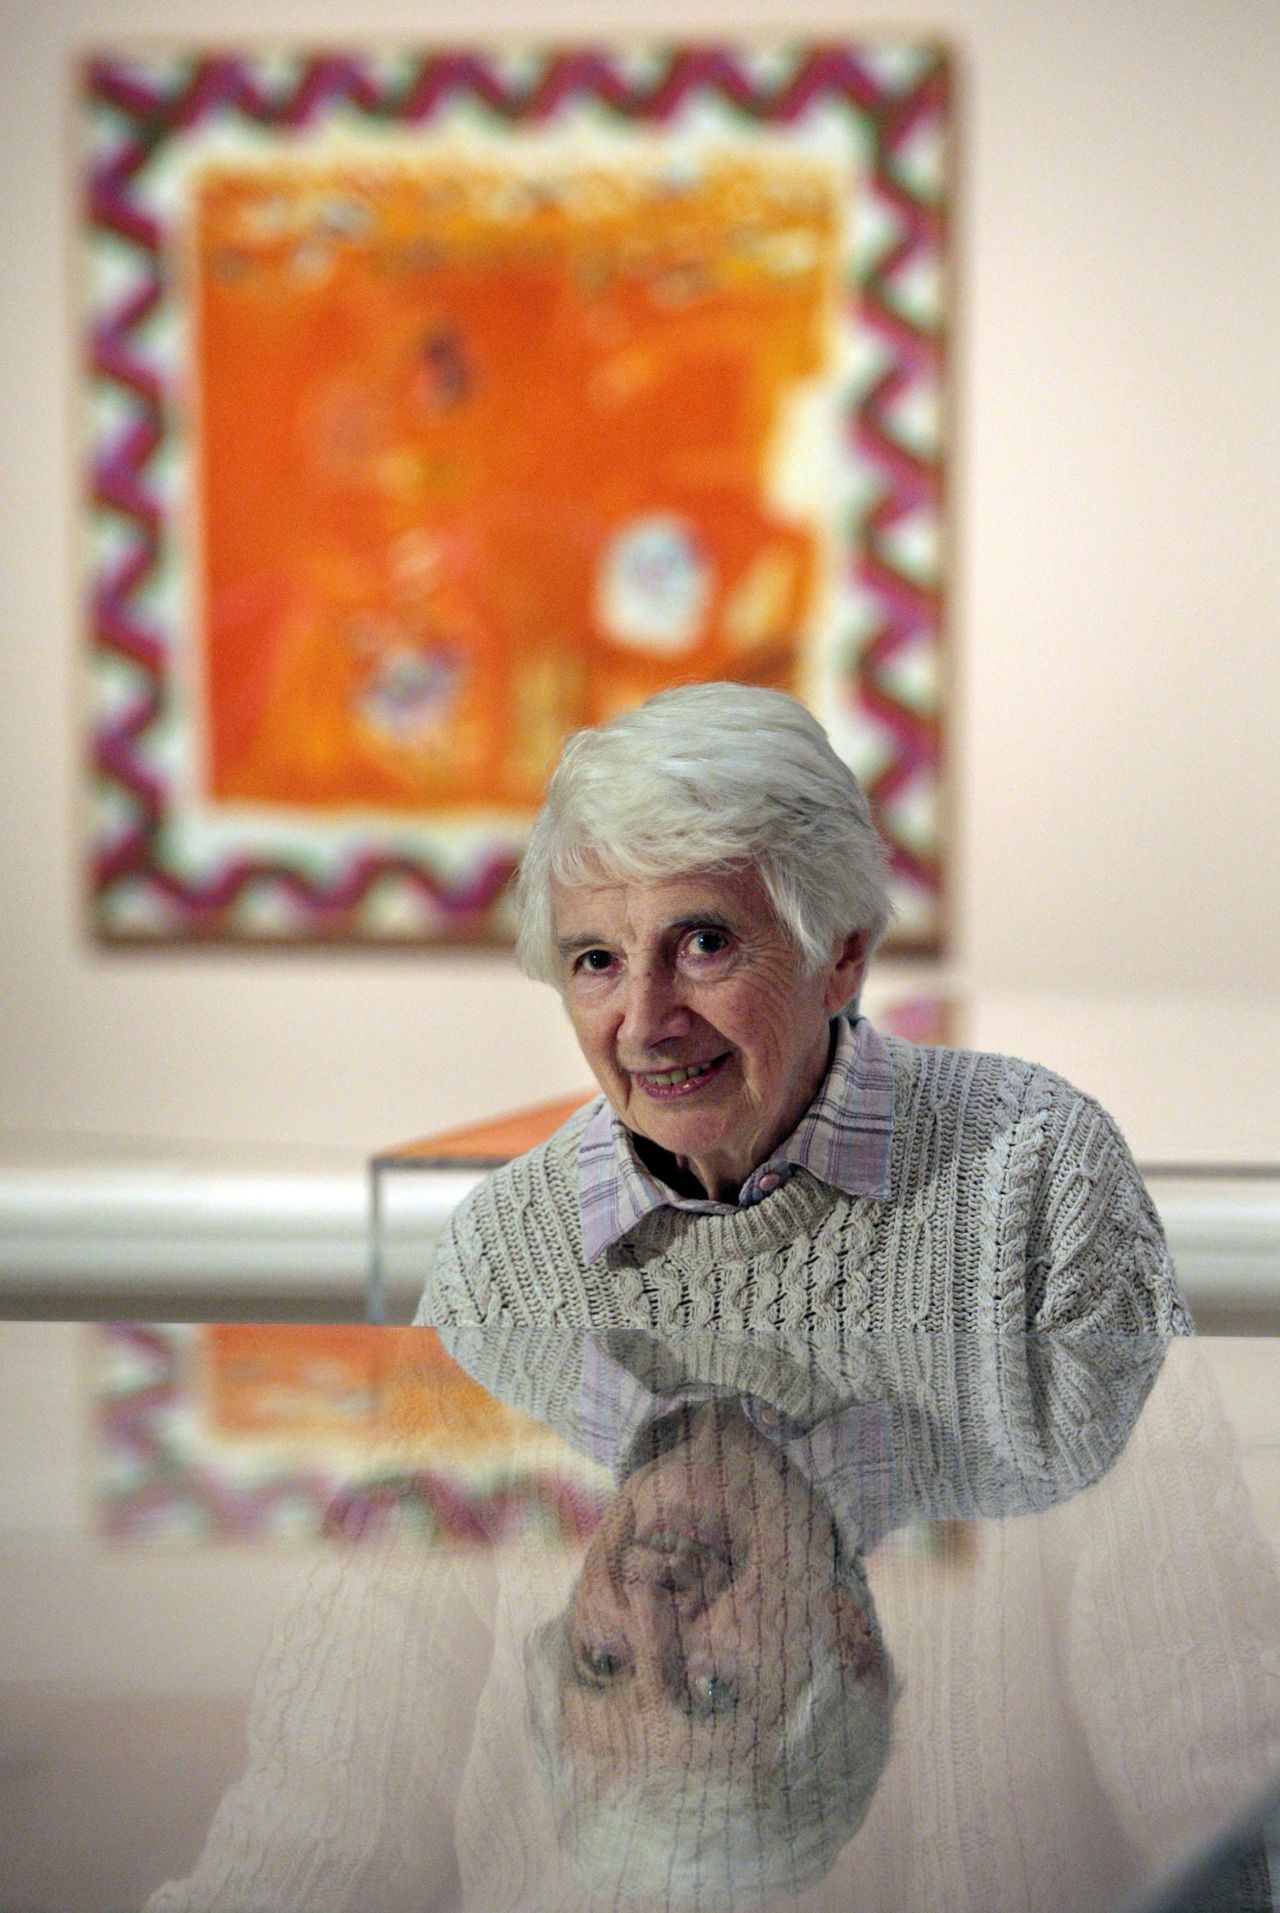 Dame Elizabeth Blackadder attending her exhibition at the Scottish National Gallery in Edinburgh.